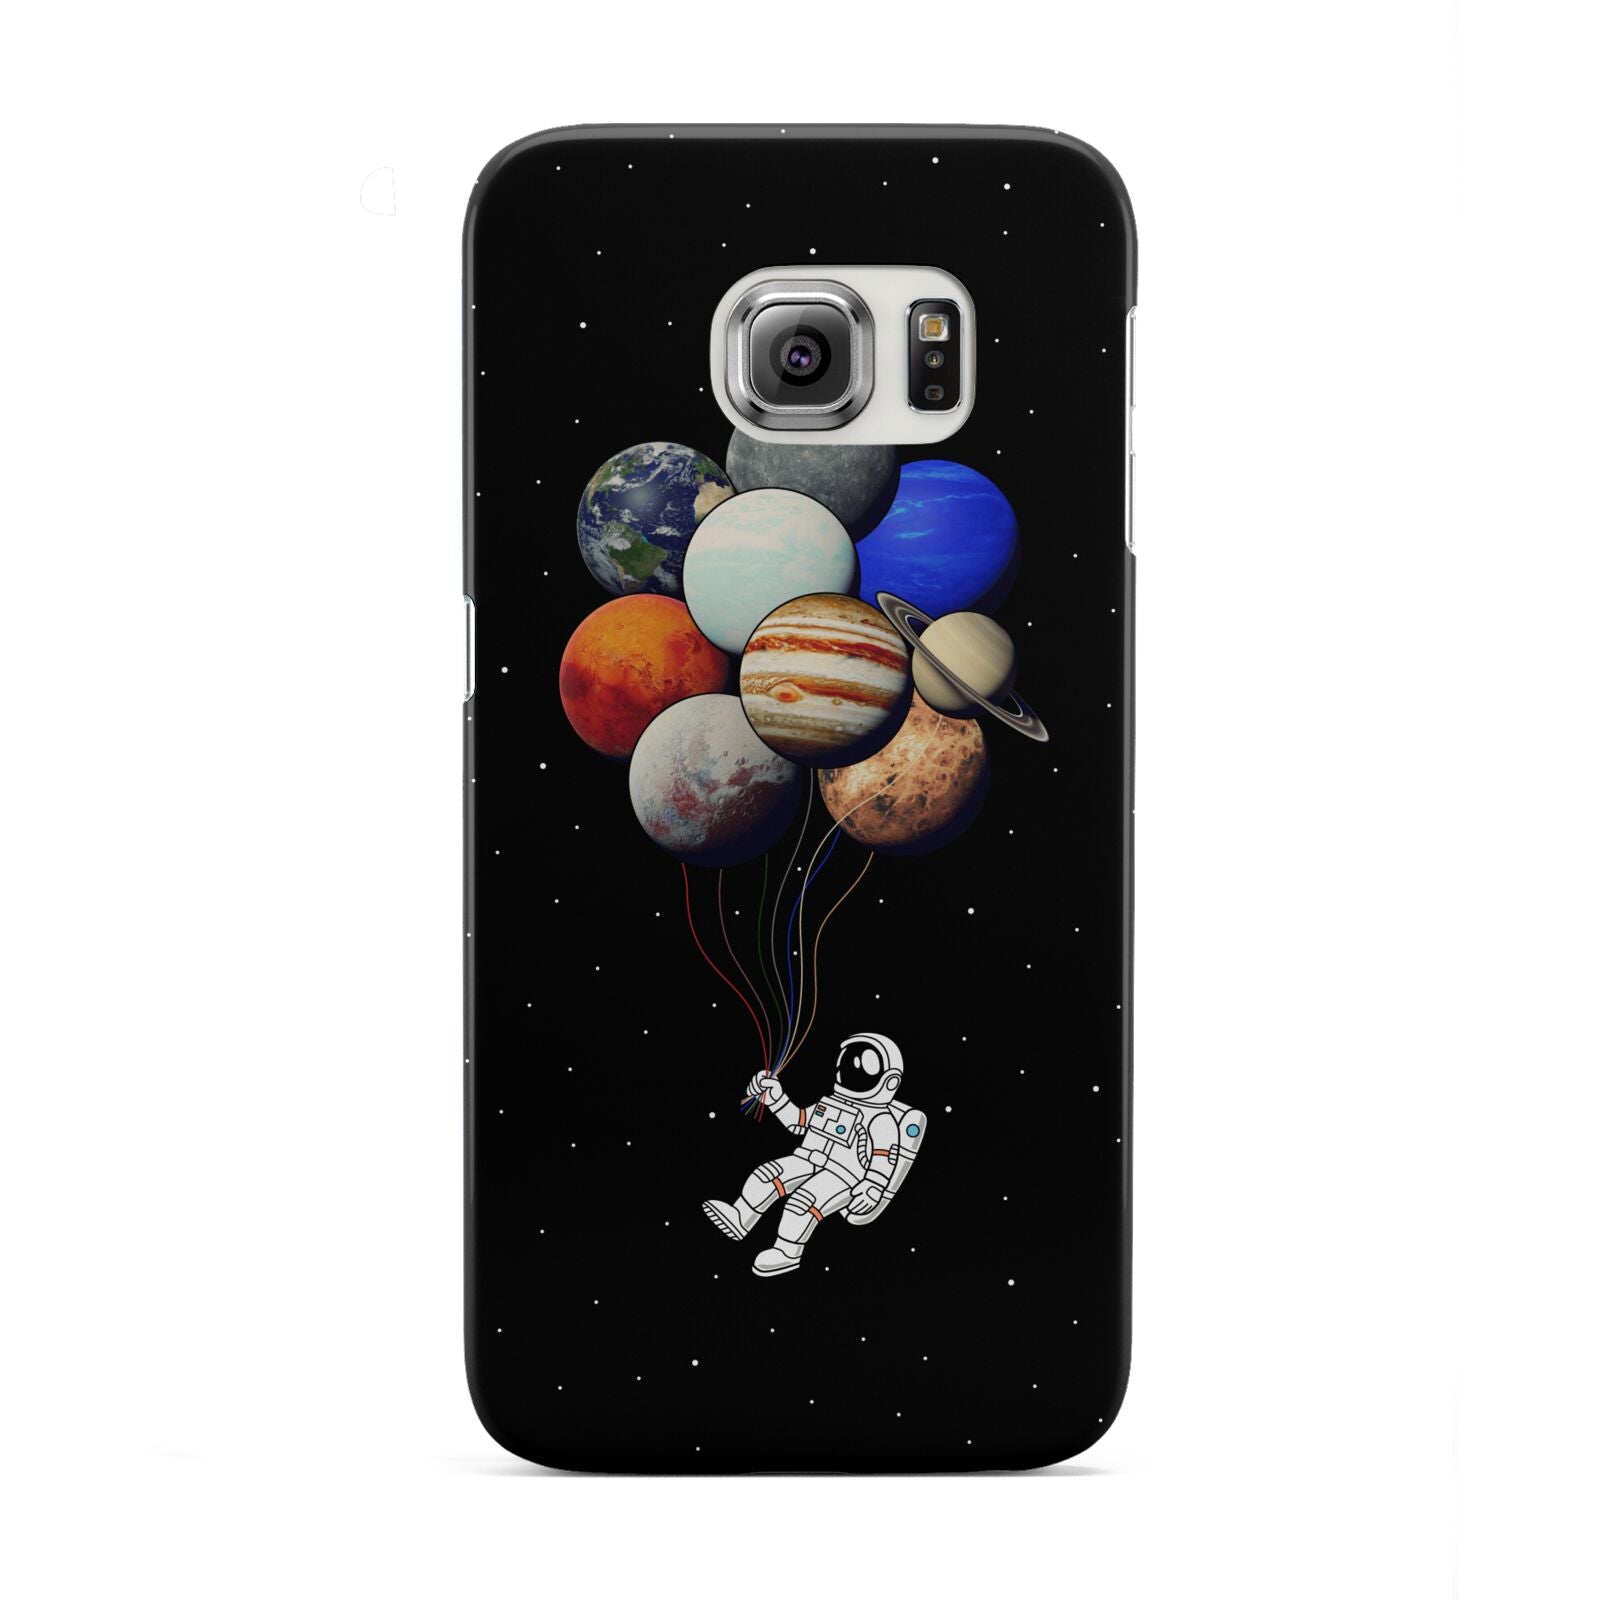 Astronaut Planet Balloons Samsung Galaxy S6 Edge Case